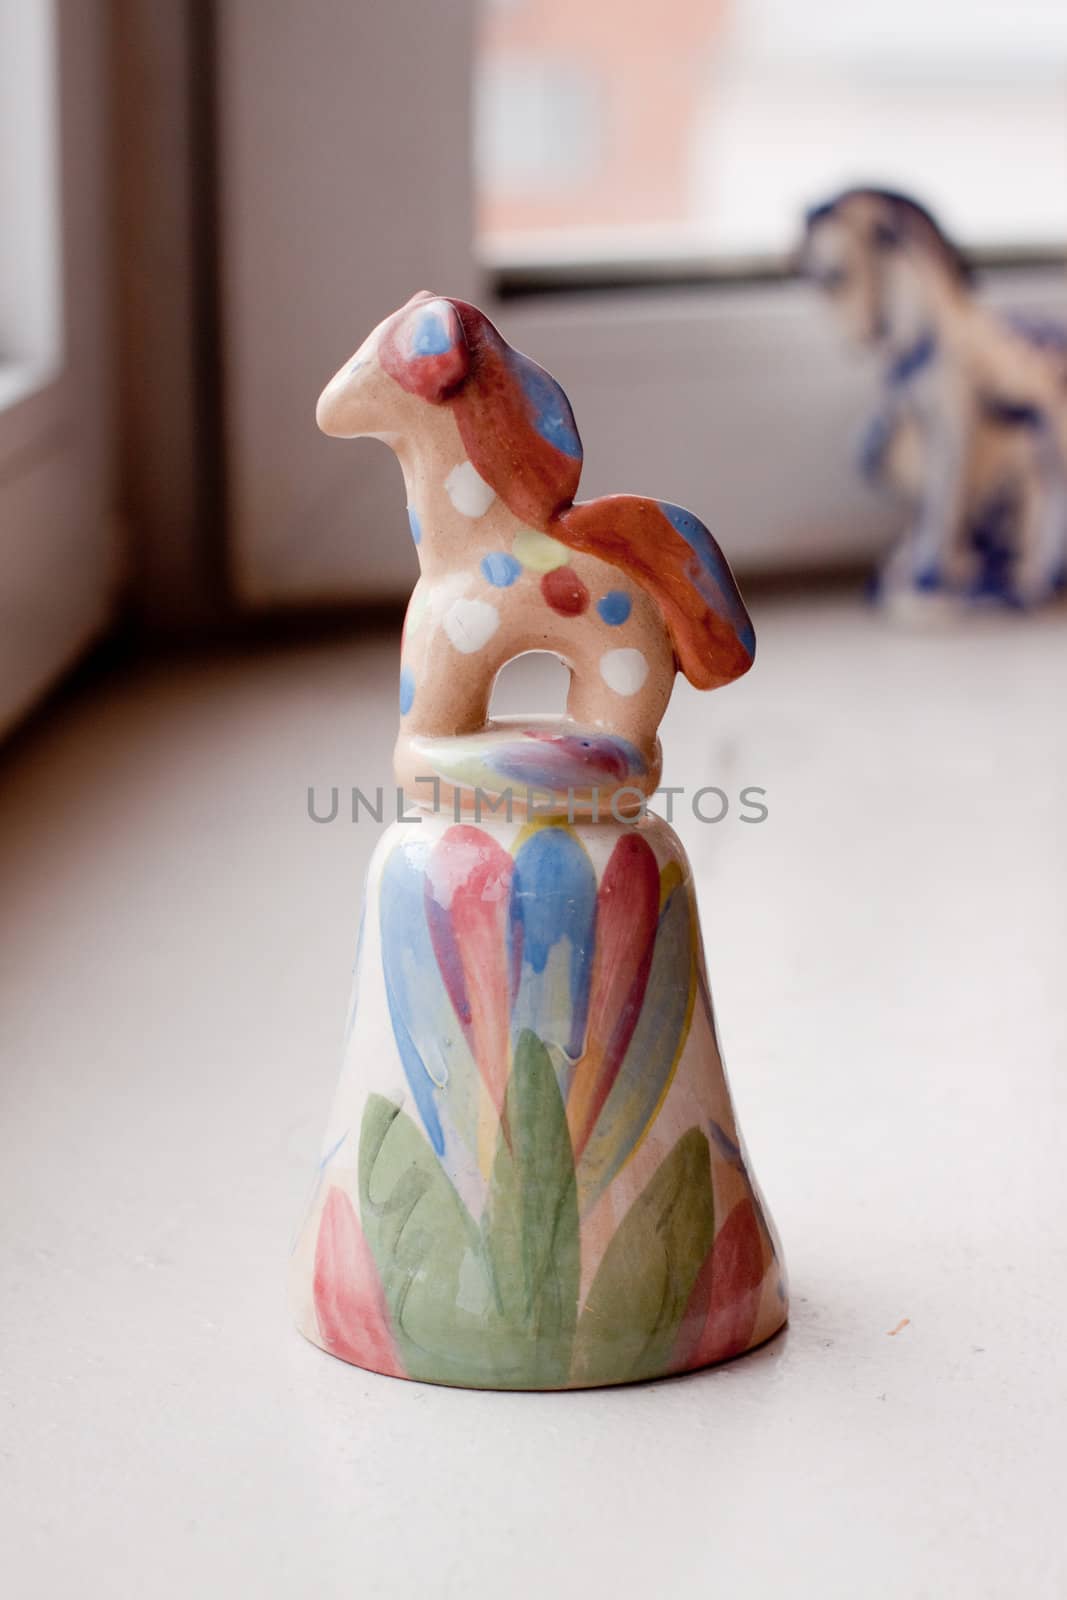 An original toy ceramics painted horse
